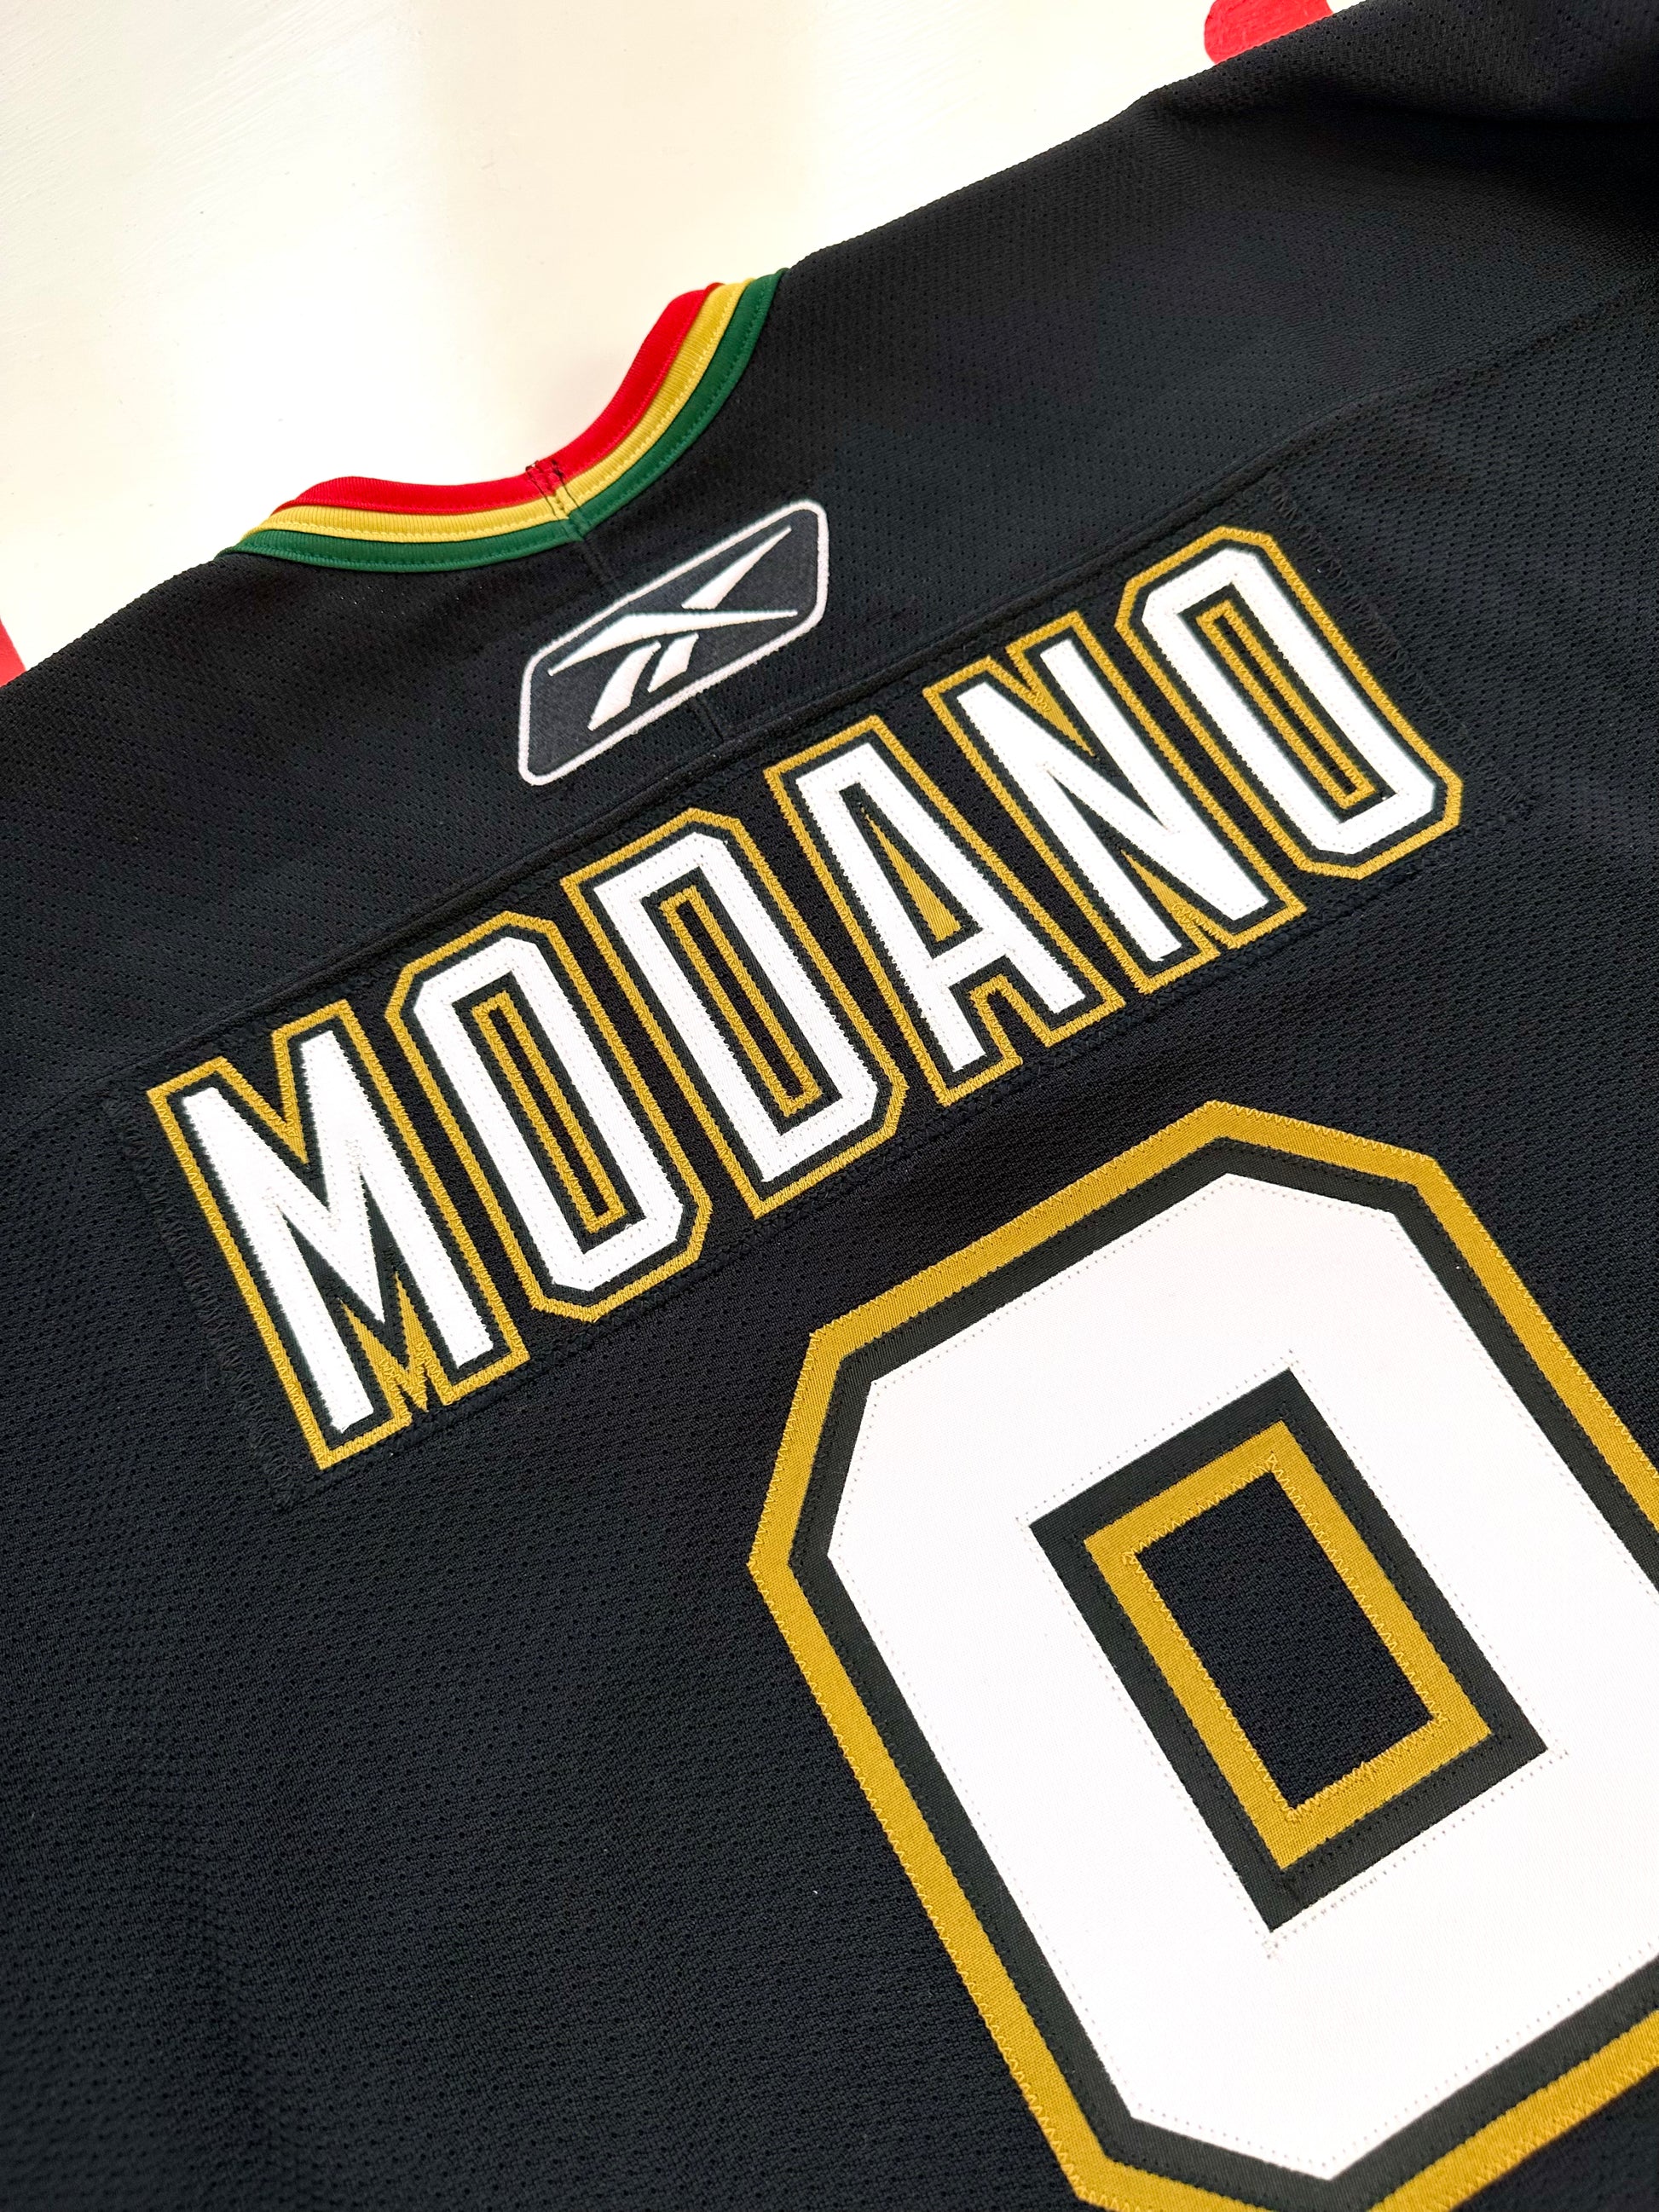 Dallas Stars 2005-2006 Mike Modano “Mooterus” NHL Hockey Jersey